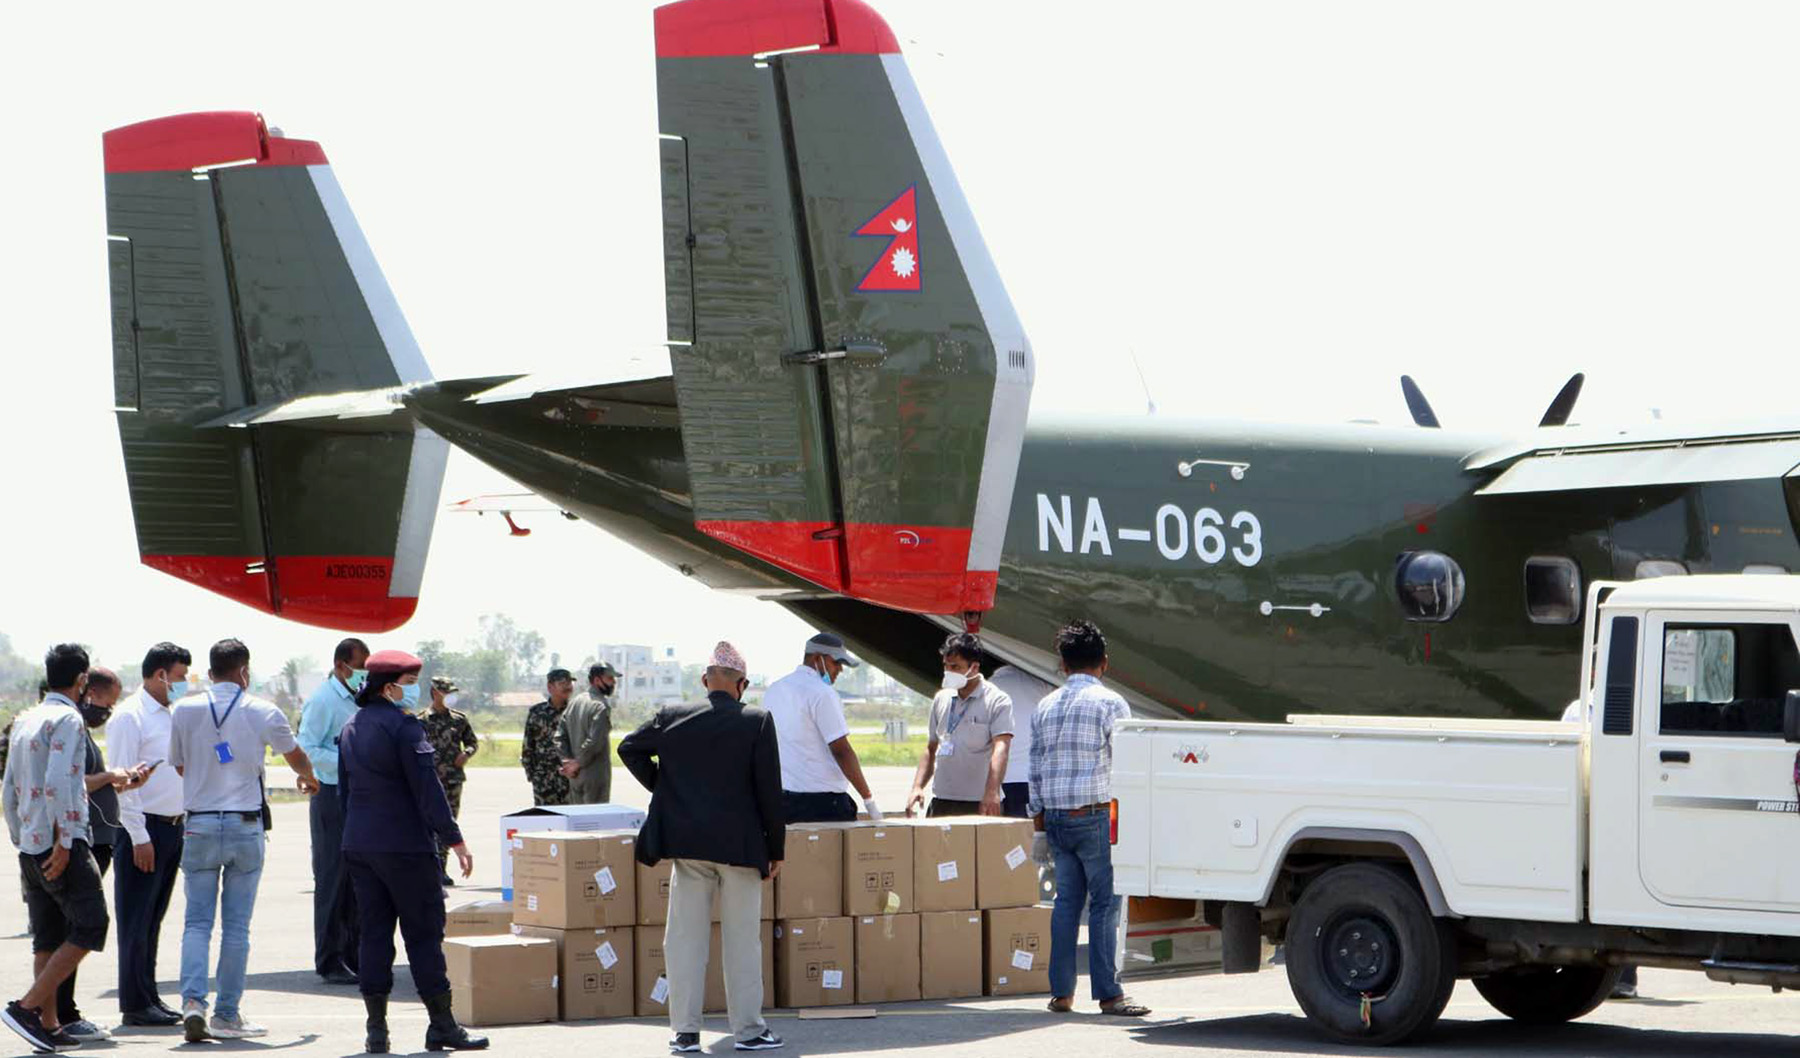 UK-donated medical supplies arrive in Kathmandu